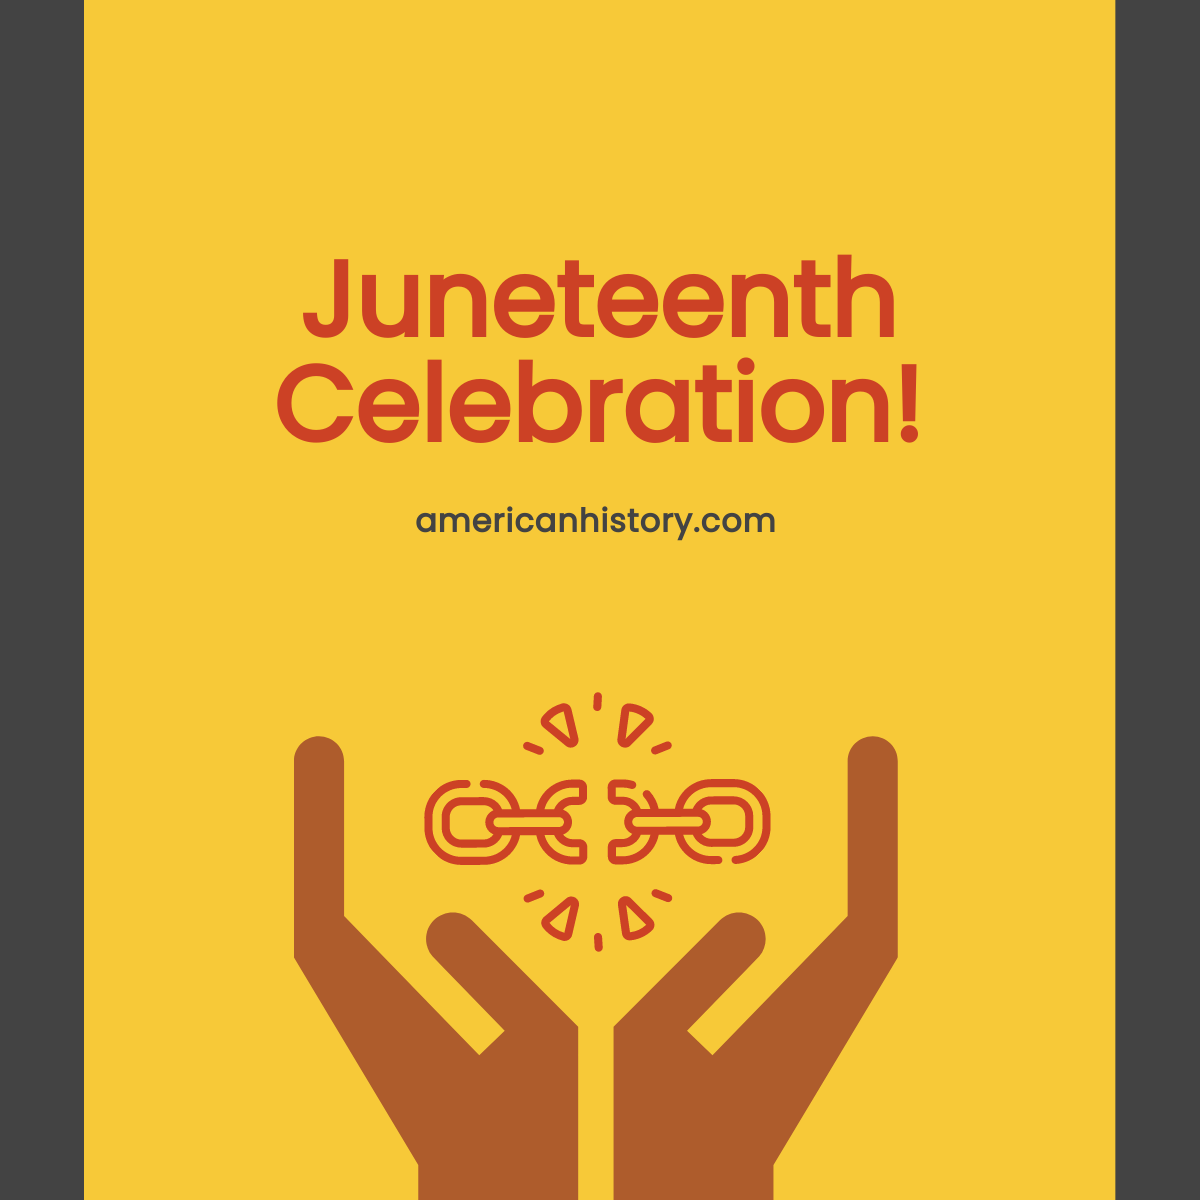 Free Juneteenth Celebration Linkedin Post Template